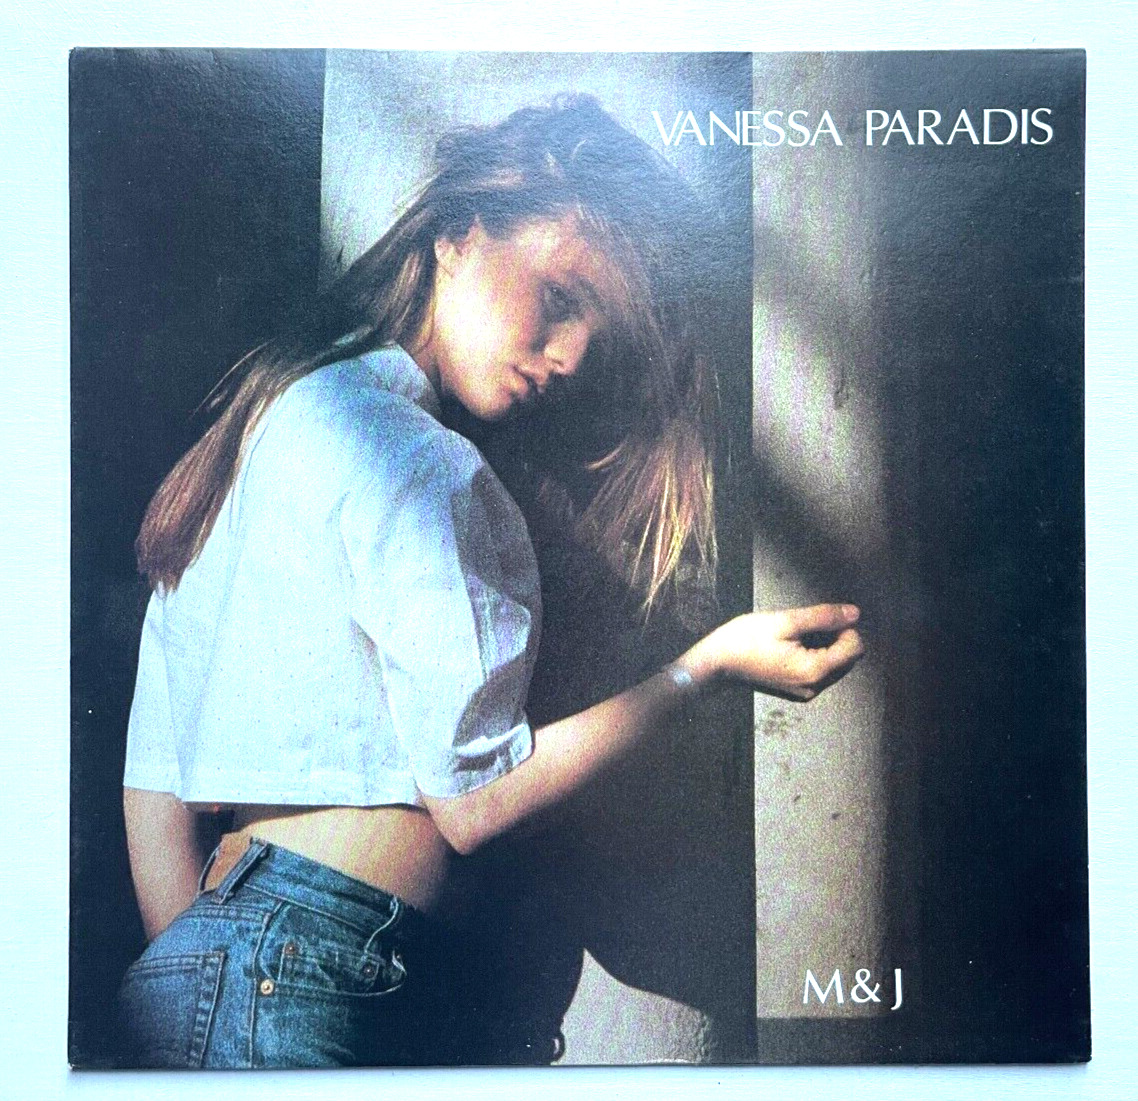 Vanessa Paradis - M & J * Vinyl Lp * 1988 * POLD 5232 1st Press * Free P&P UK *